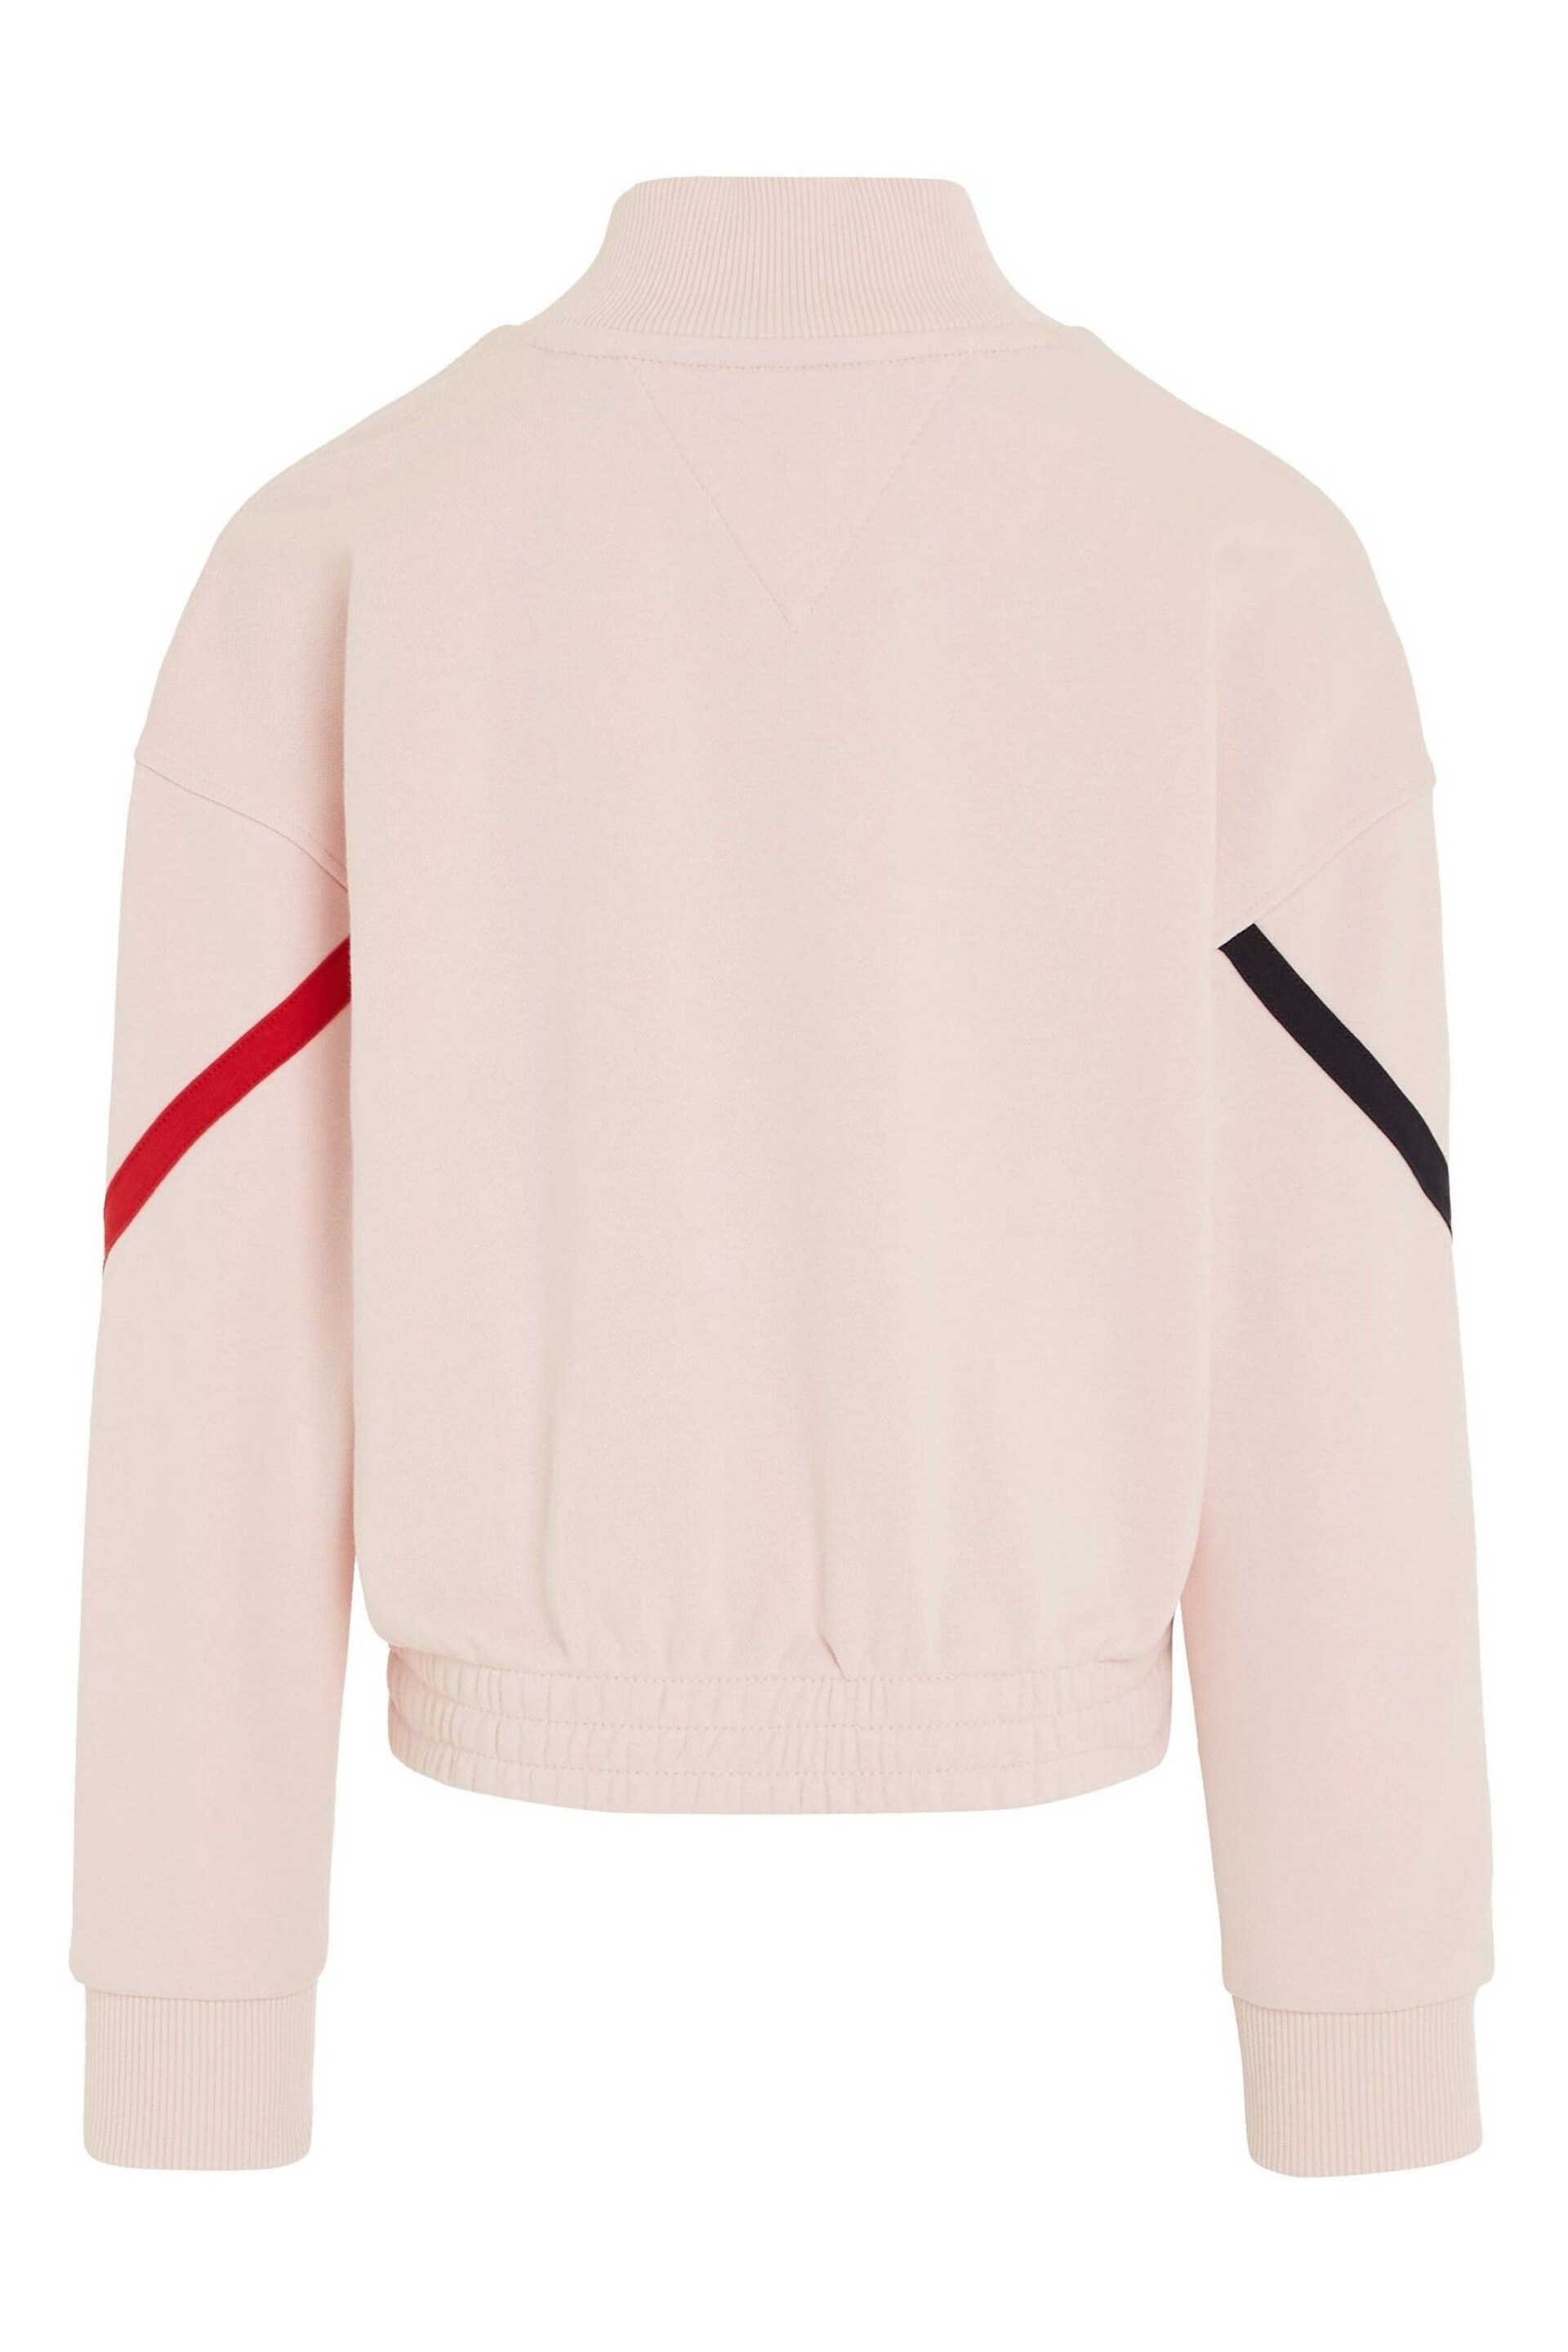 Tommy Hilfiger Pink Global Stripe Half Zip Sweater - Image 5 of 6